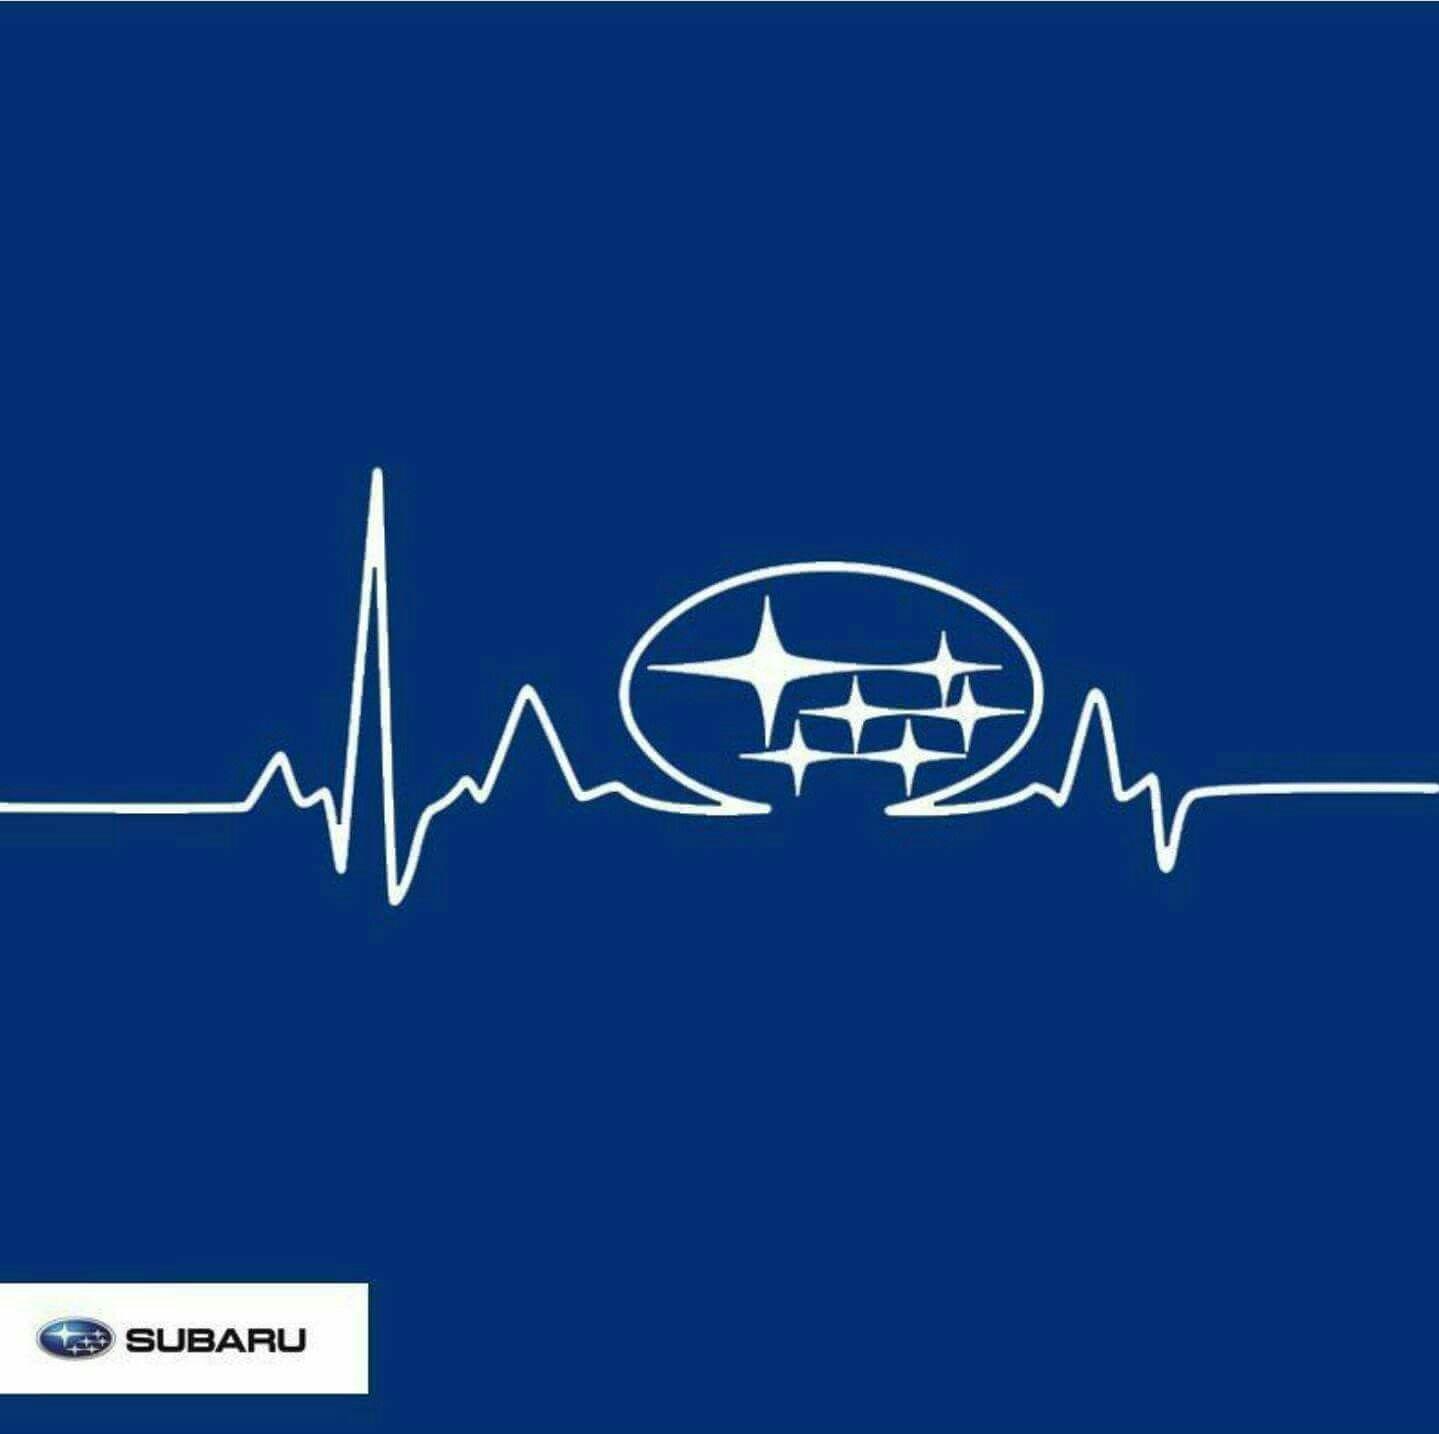 Subaru Impreza WRX STI Logo - Pin by Karen Thorpe on Logos/wallpaper, ect | Subaru, Subaru wrx ...